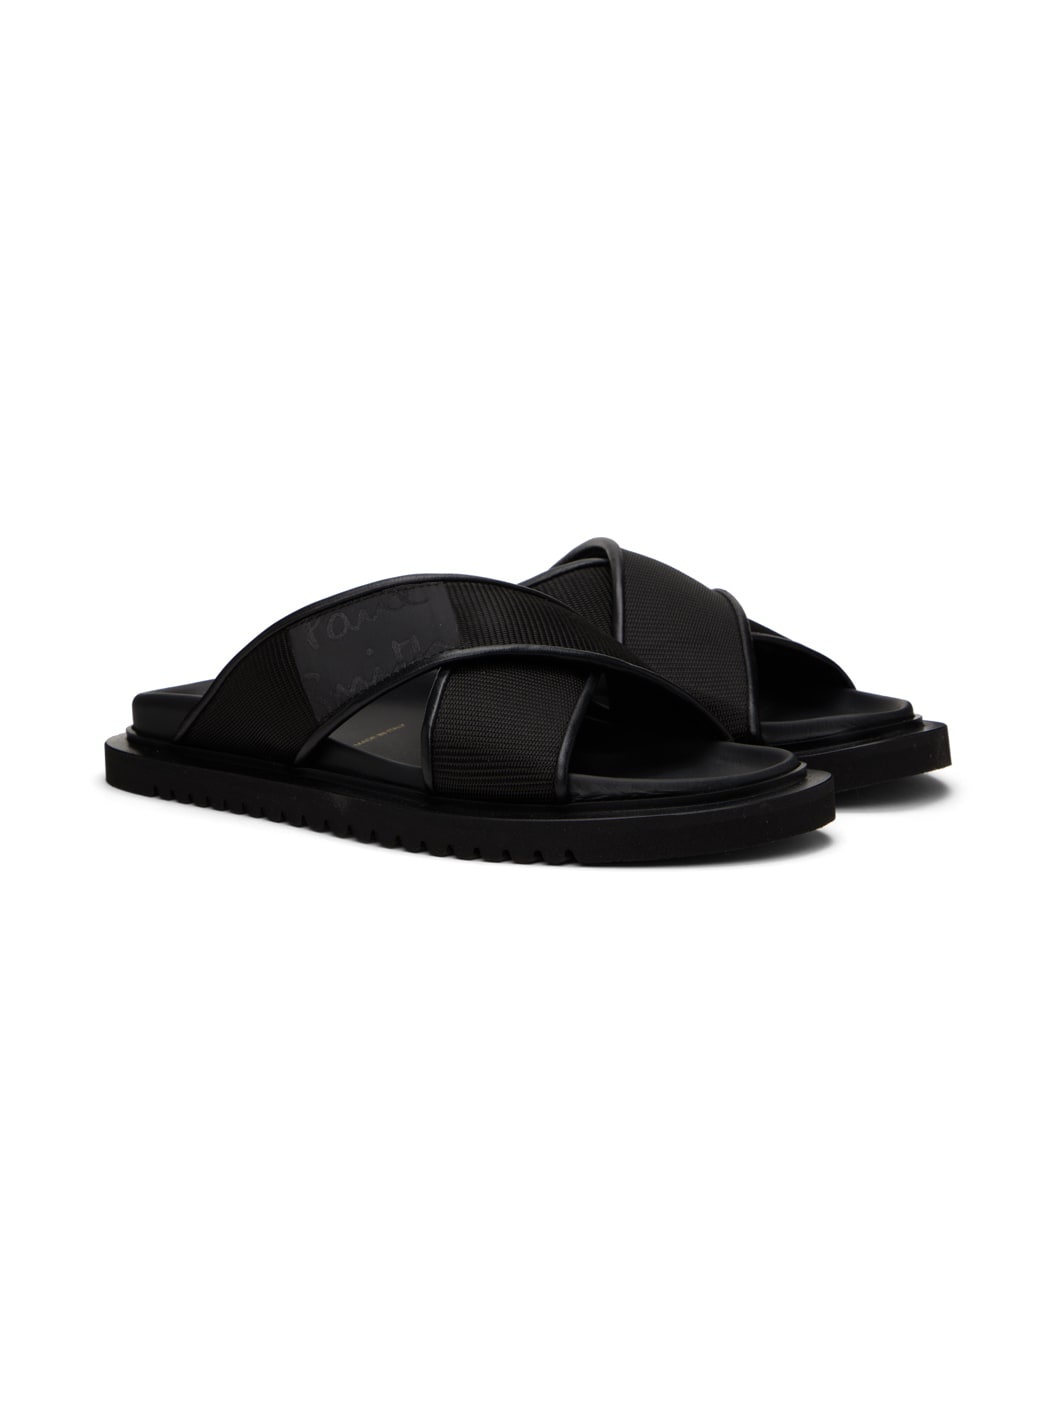 Black Vamori Sandals - 4